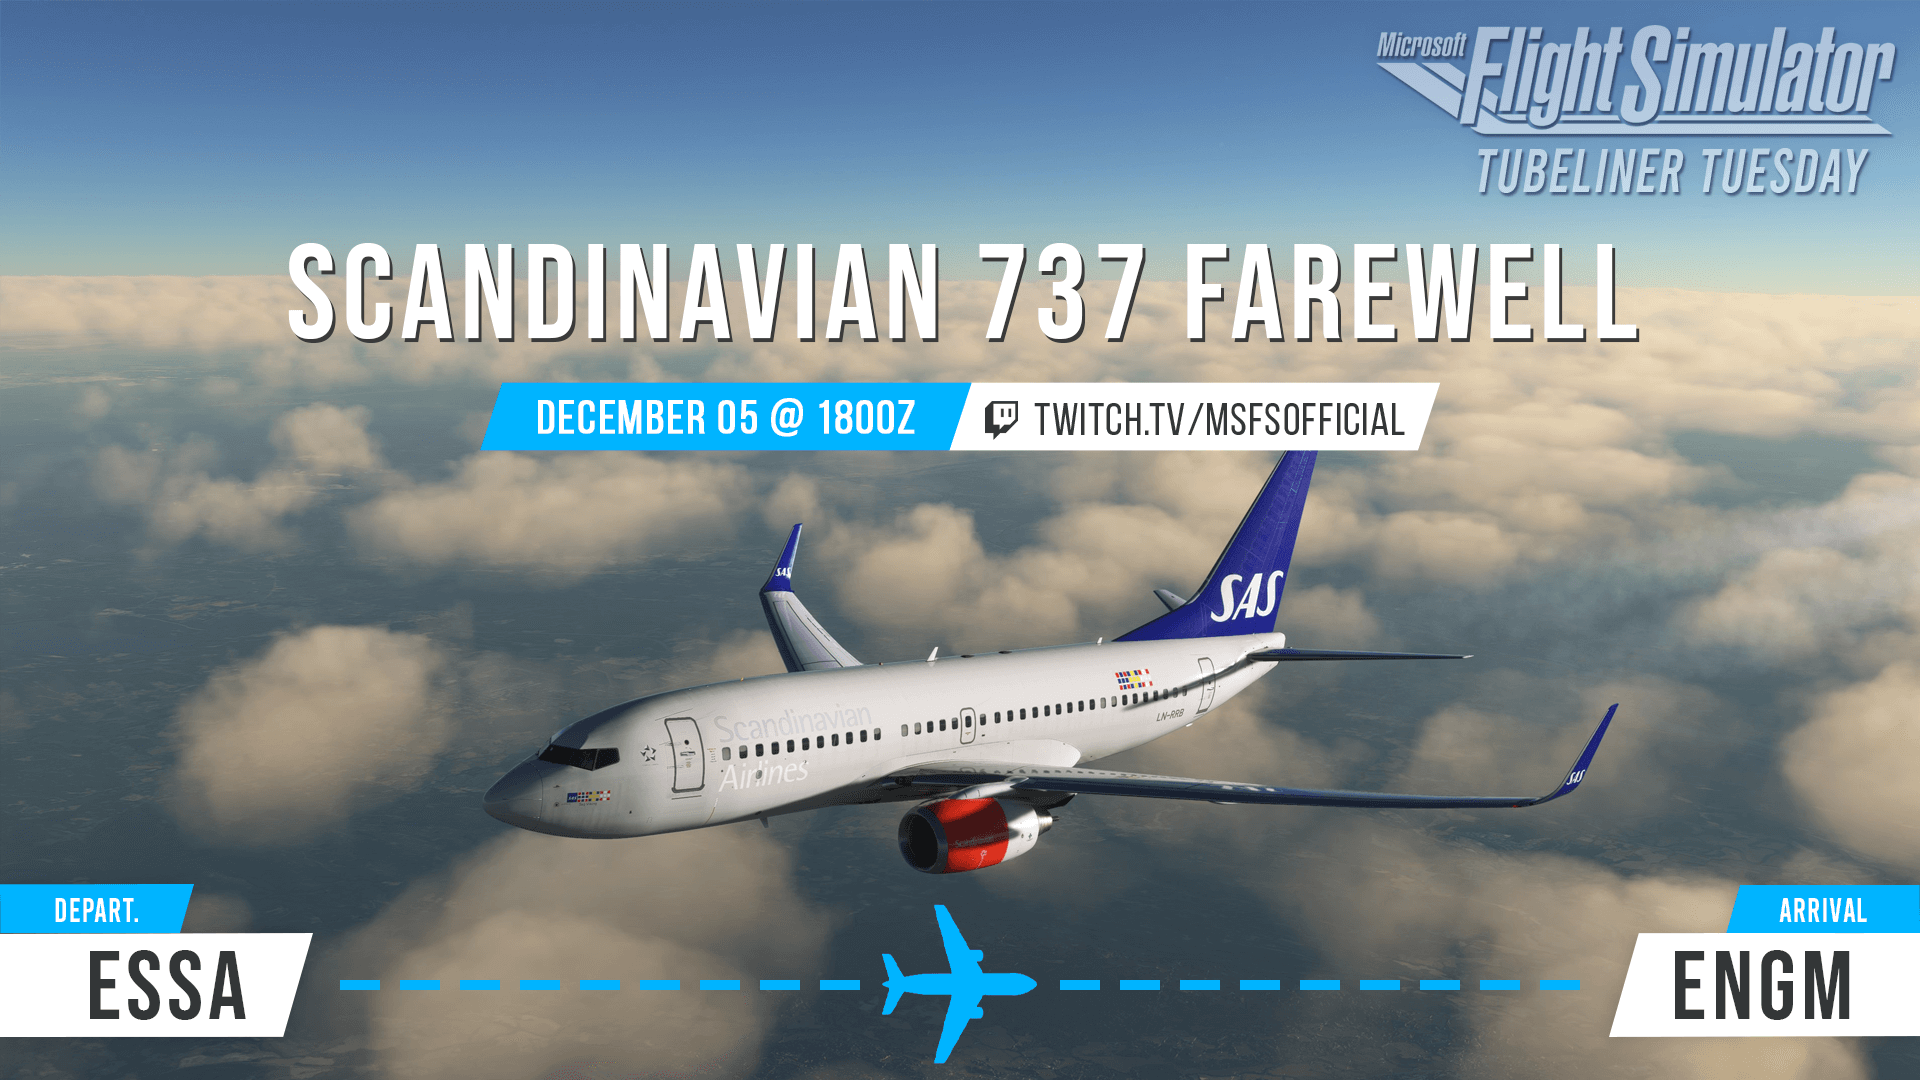 Tubeliner Tuesday - Scandinavian 737 Farewell - december 05 @ 1800Z twitch.tv/msfsofficial